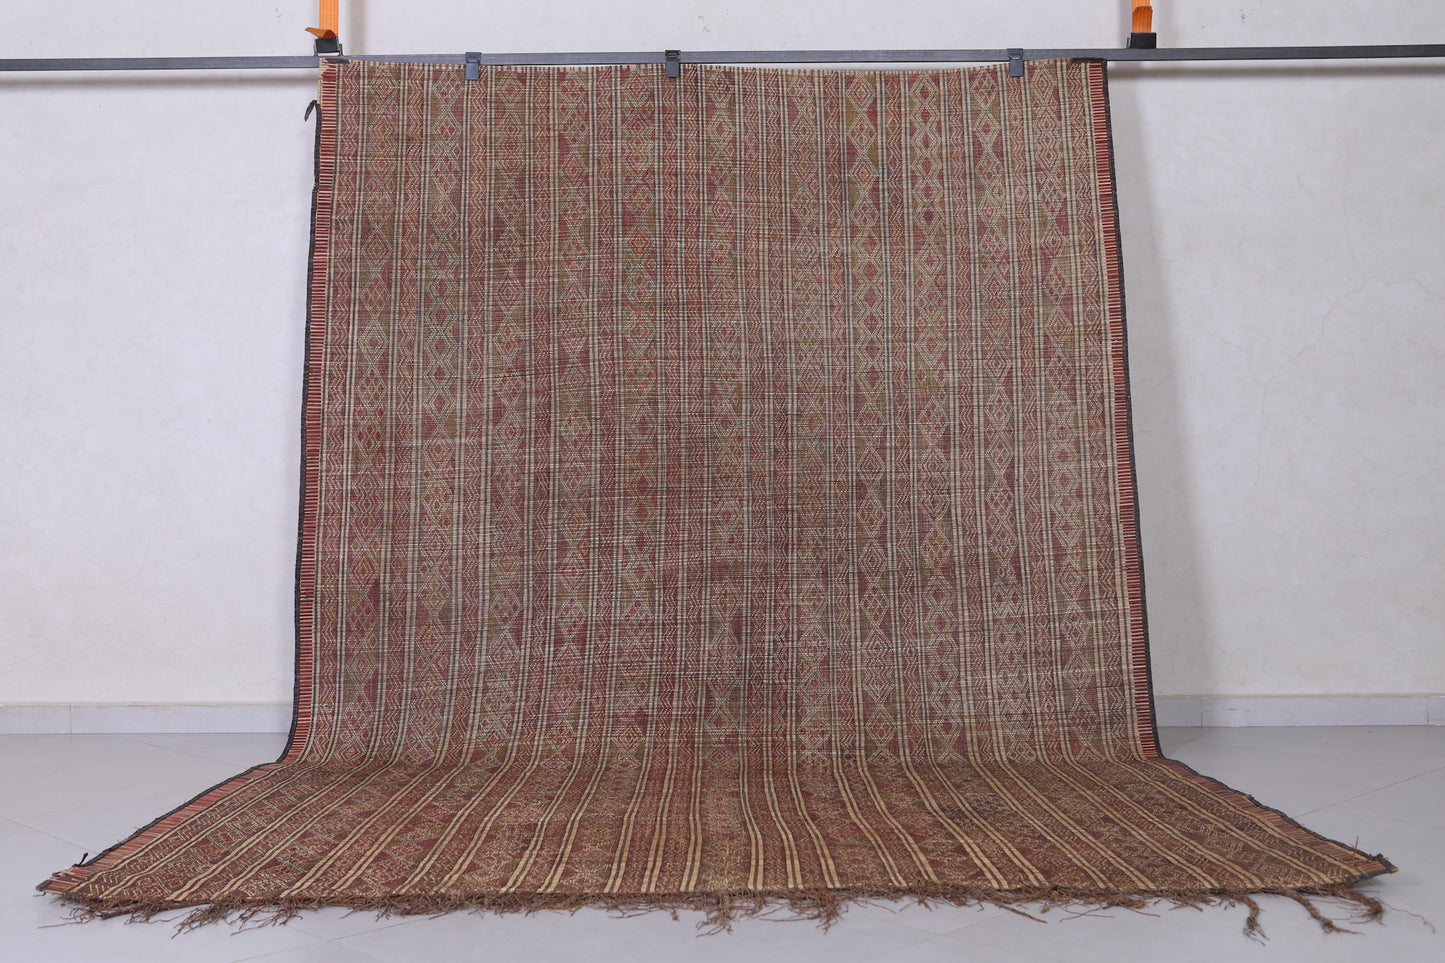 Tuareg rug 6.6 X 9.6 Feet